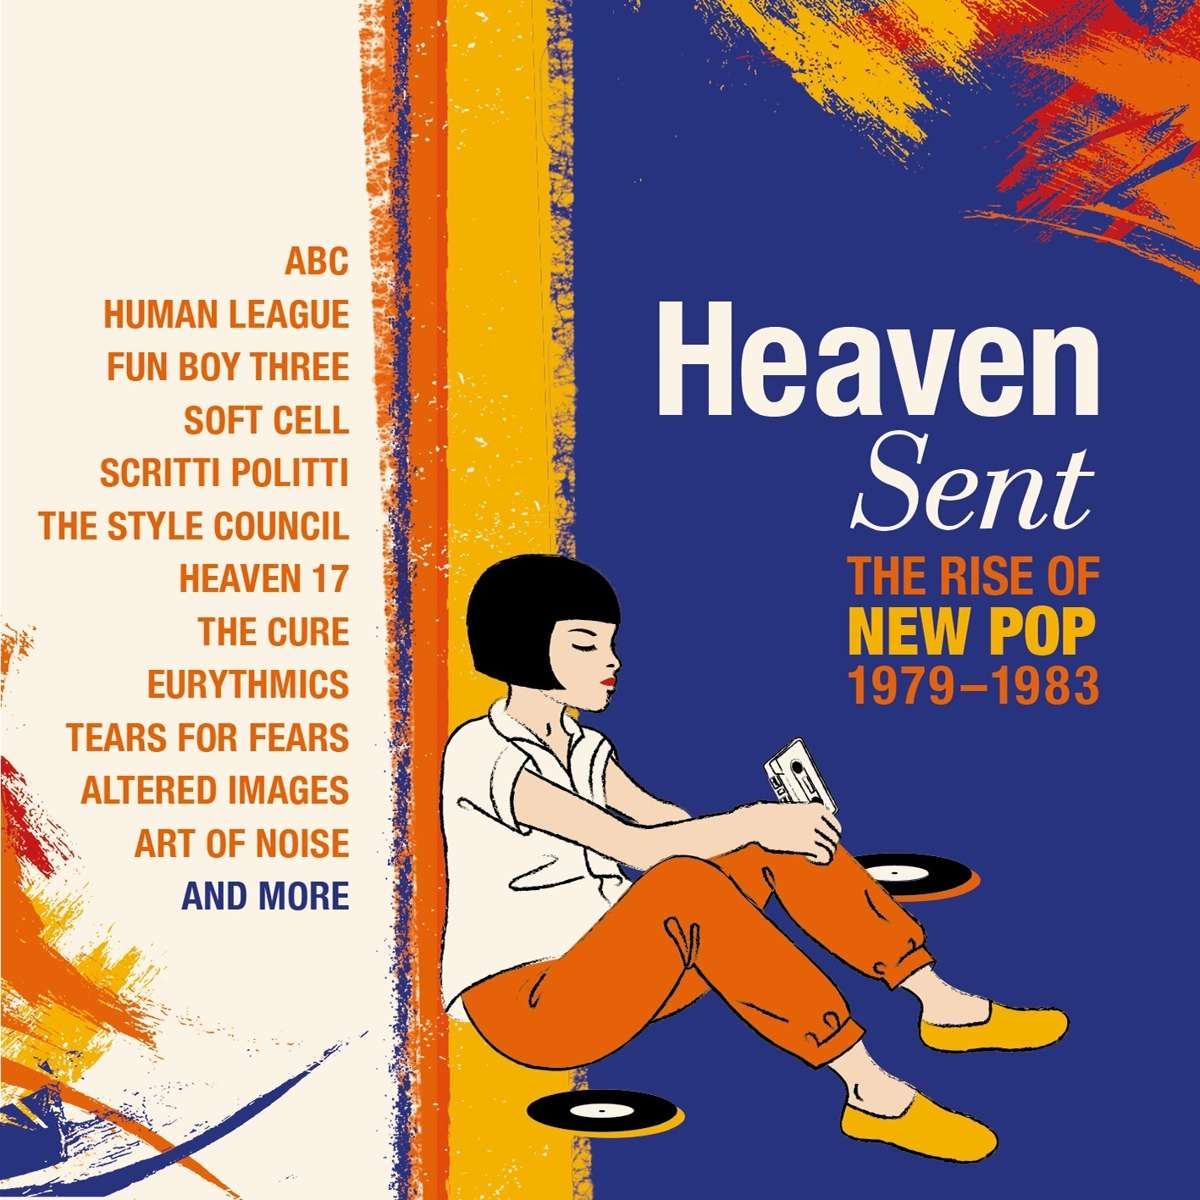 HEAVEN SENT - THE RISE OF NEW POP 1979-1